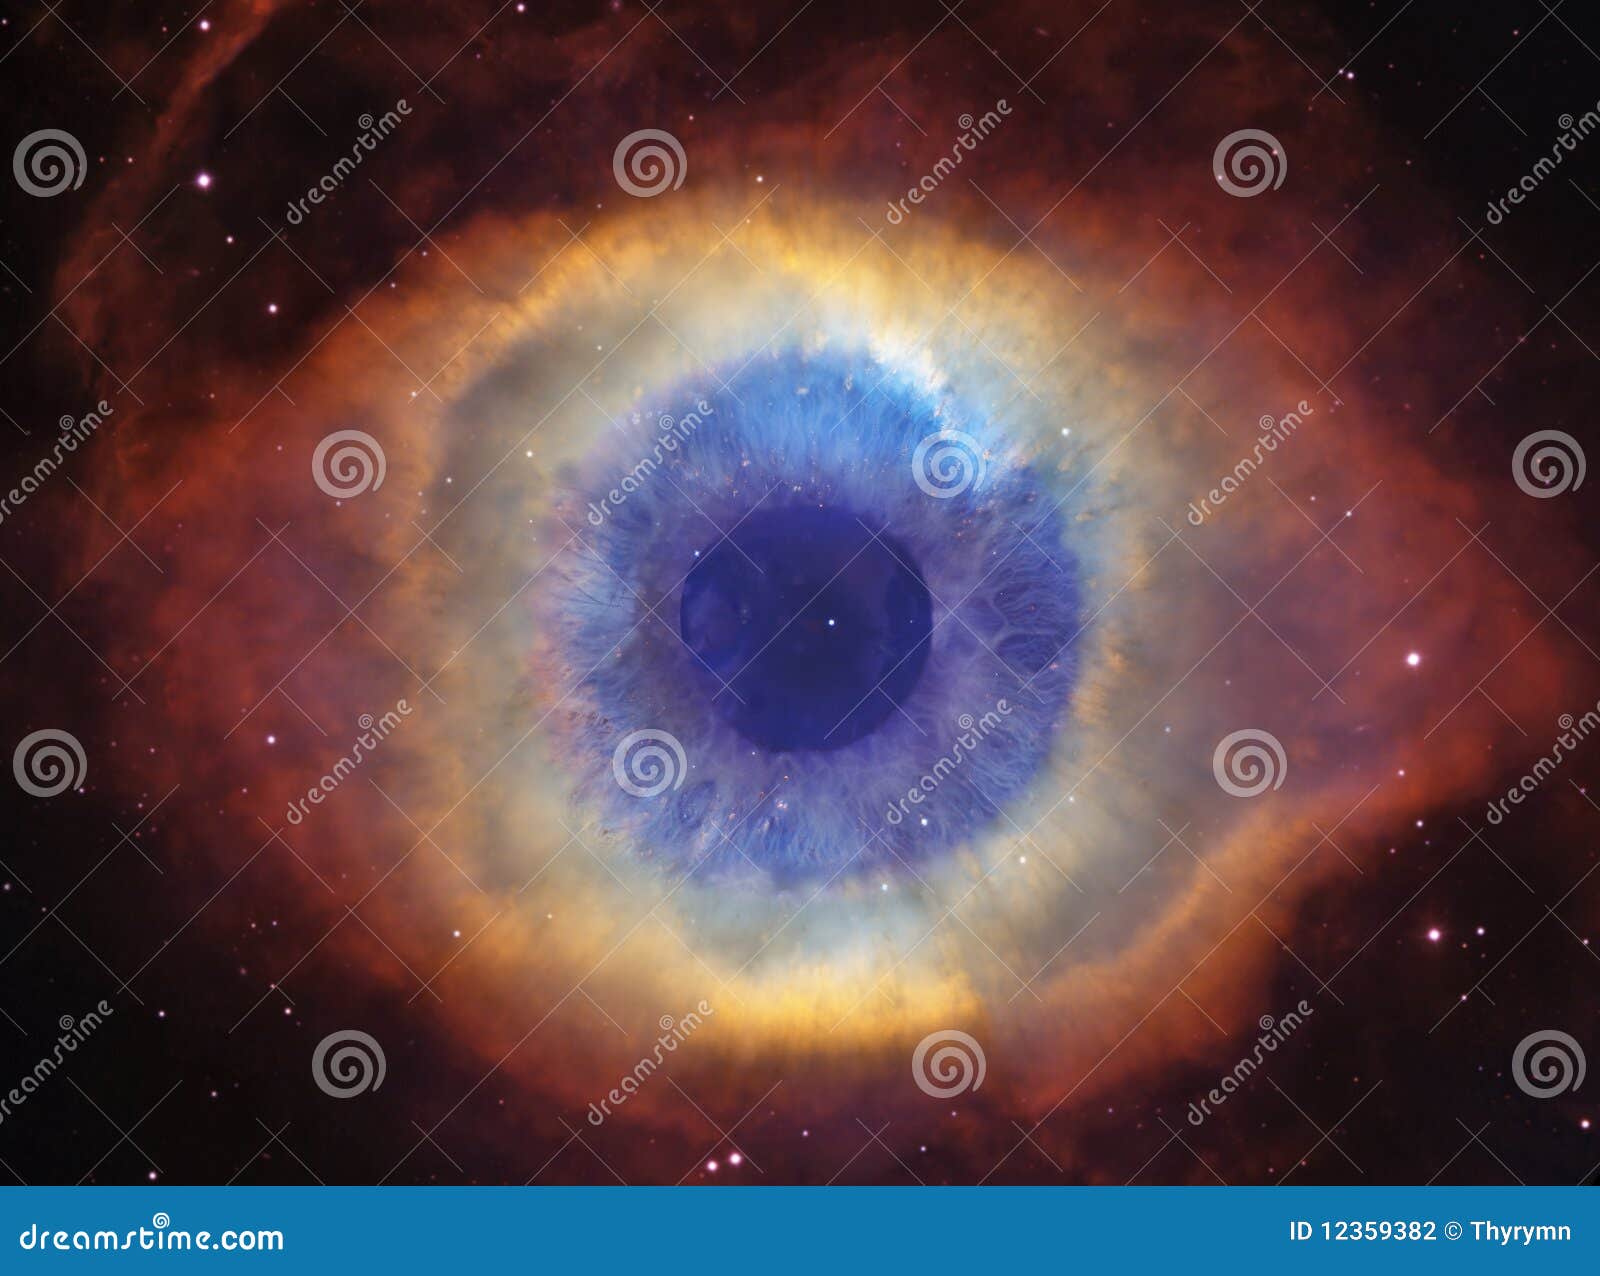 god's eye (helix nebula)